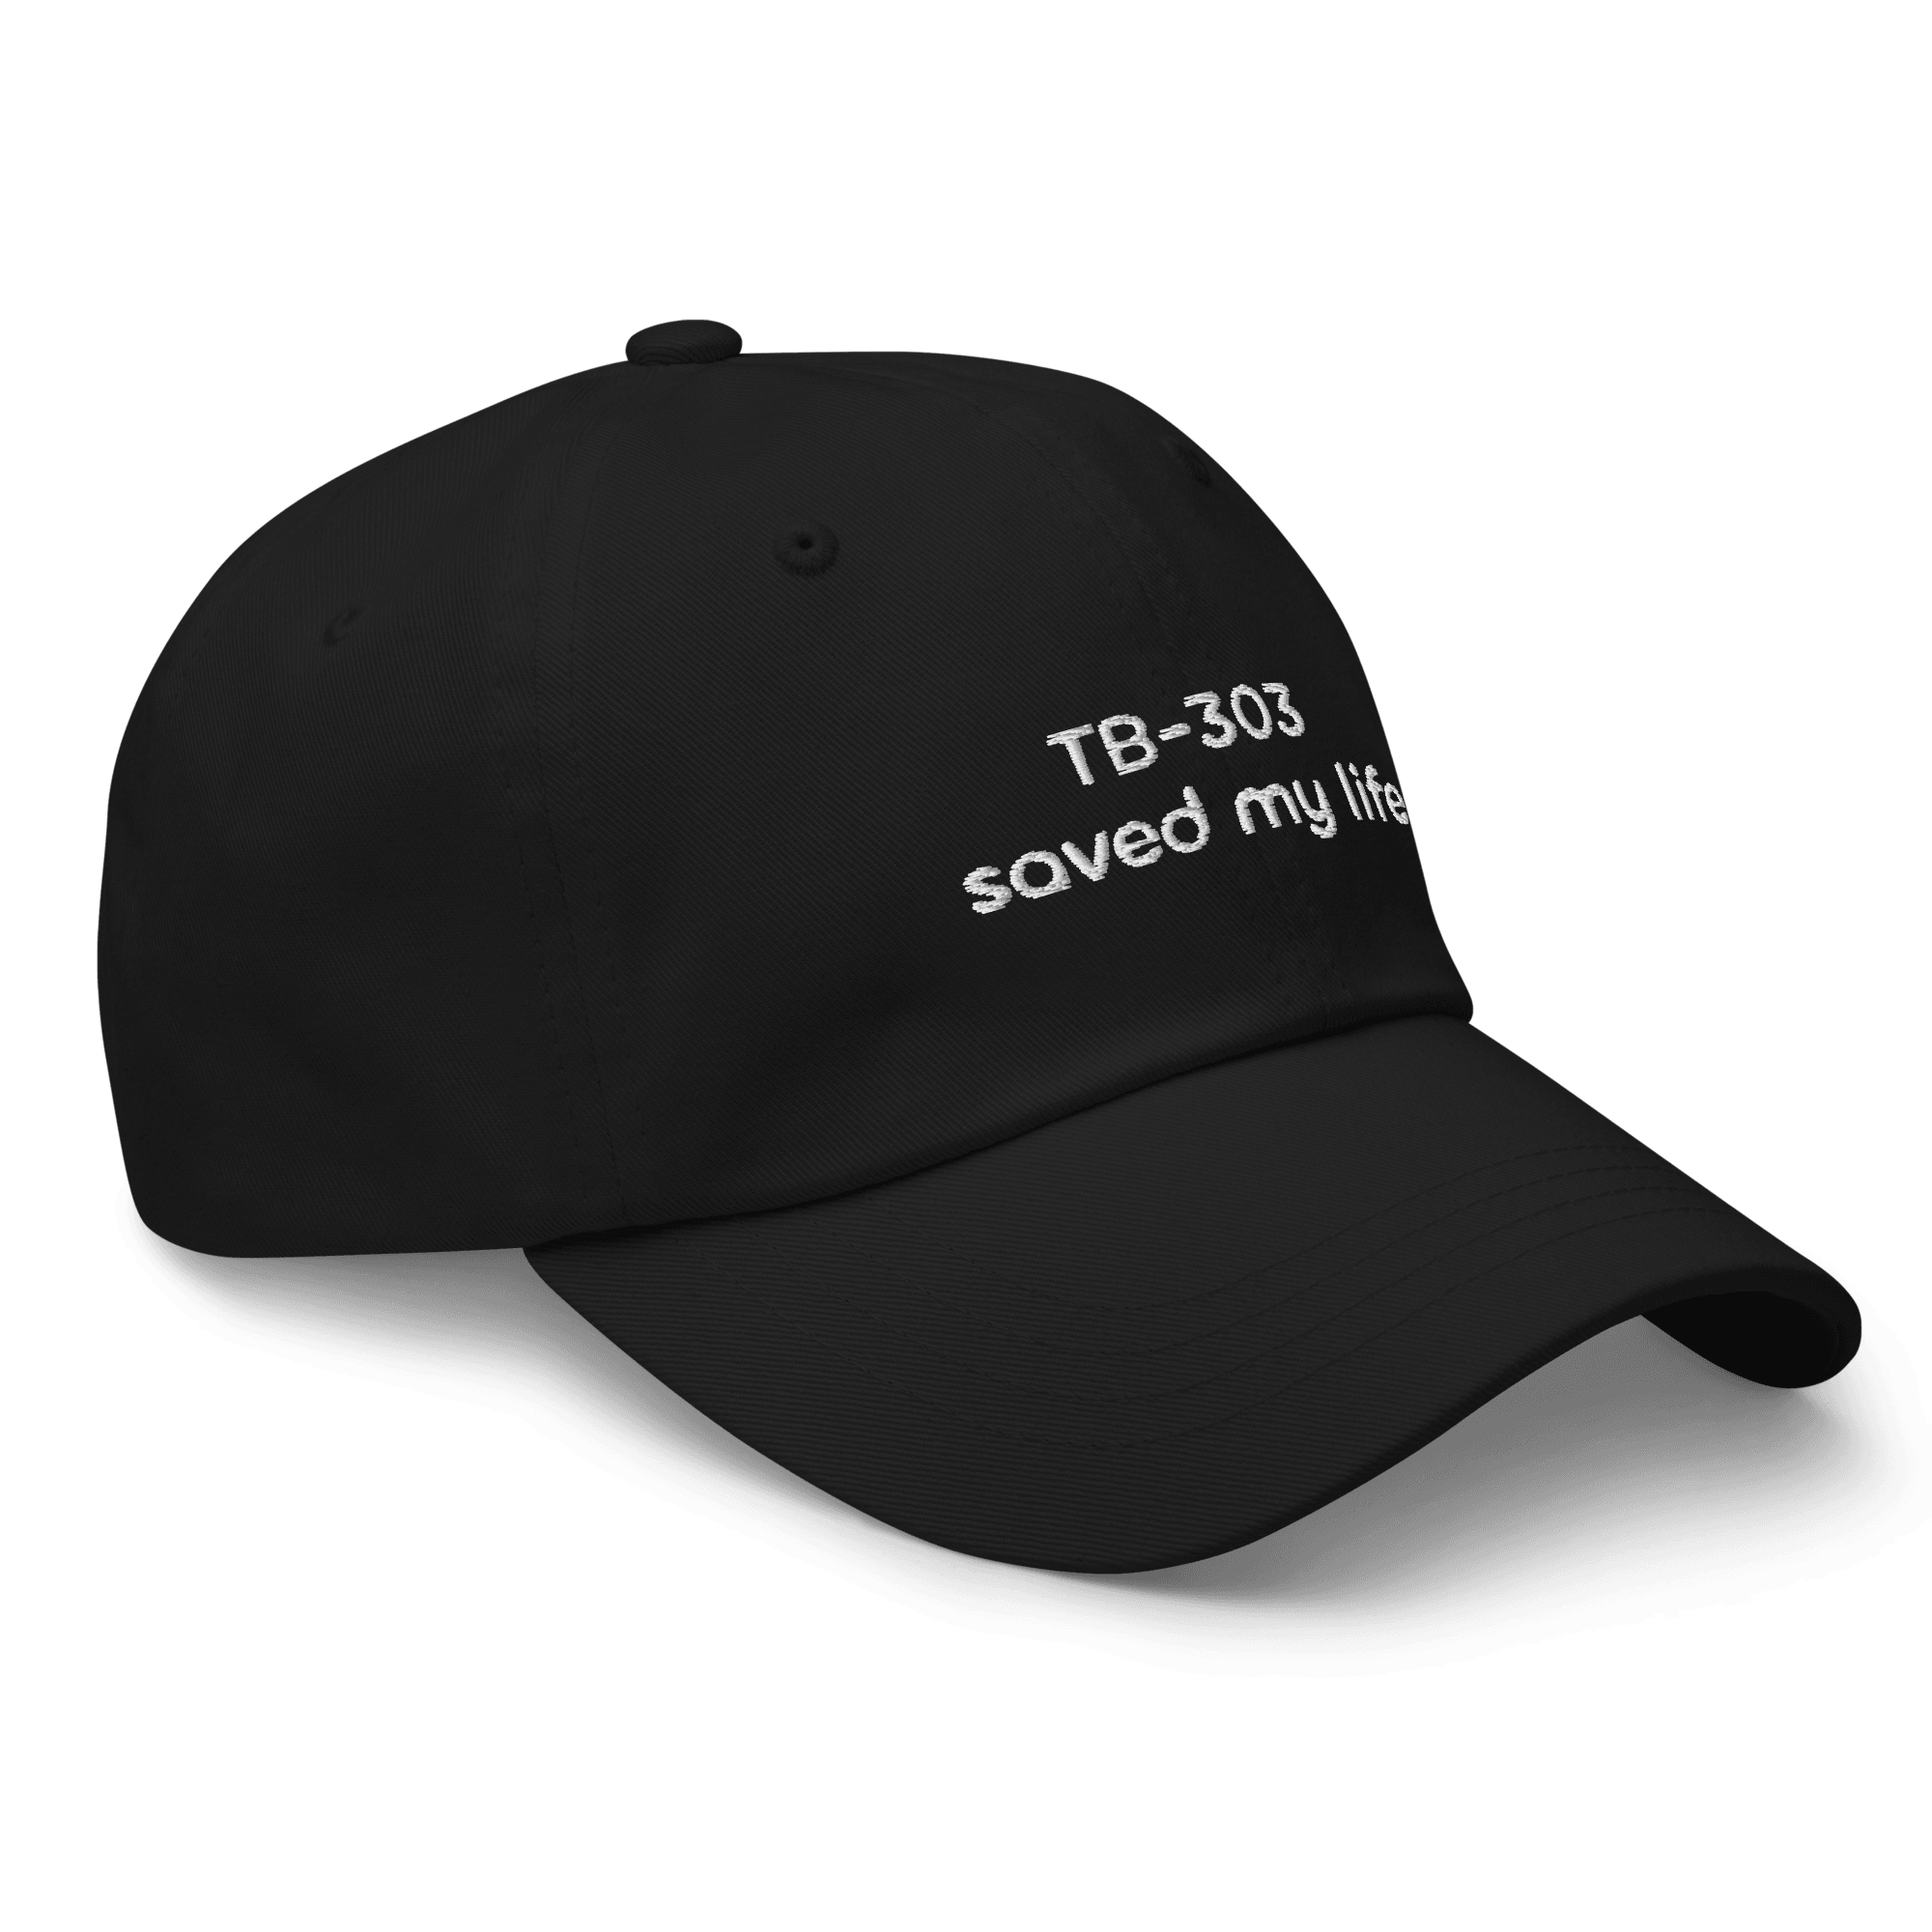 TB-303 saved my life® 🧢 Hat (LIMITED) - Kikillo Club